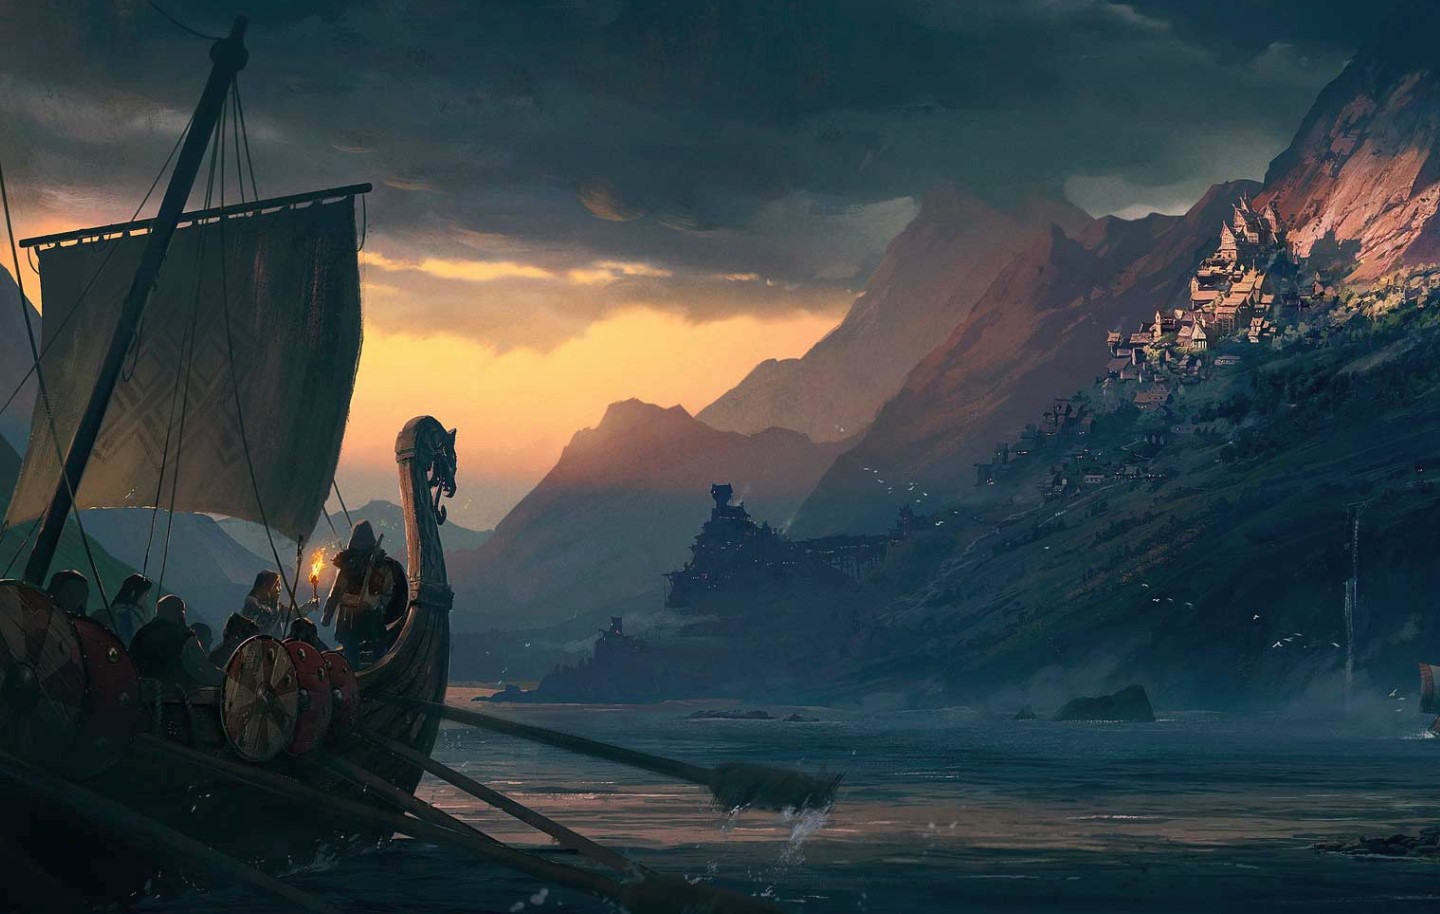 [Actualizado] Las imágenes de Assassin’s Creed Ragnarok, la próxima entrega vikinga de la saga, eran falsas